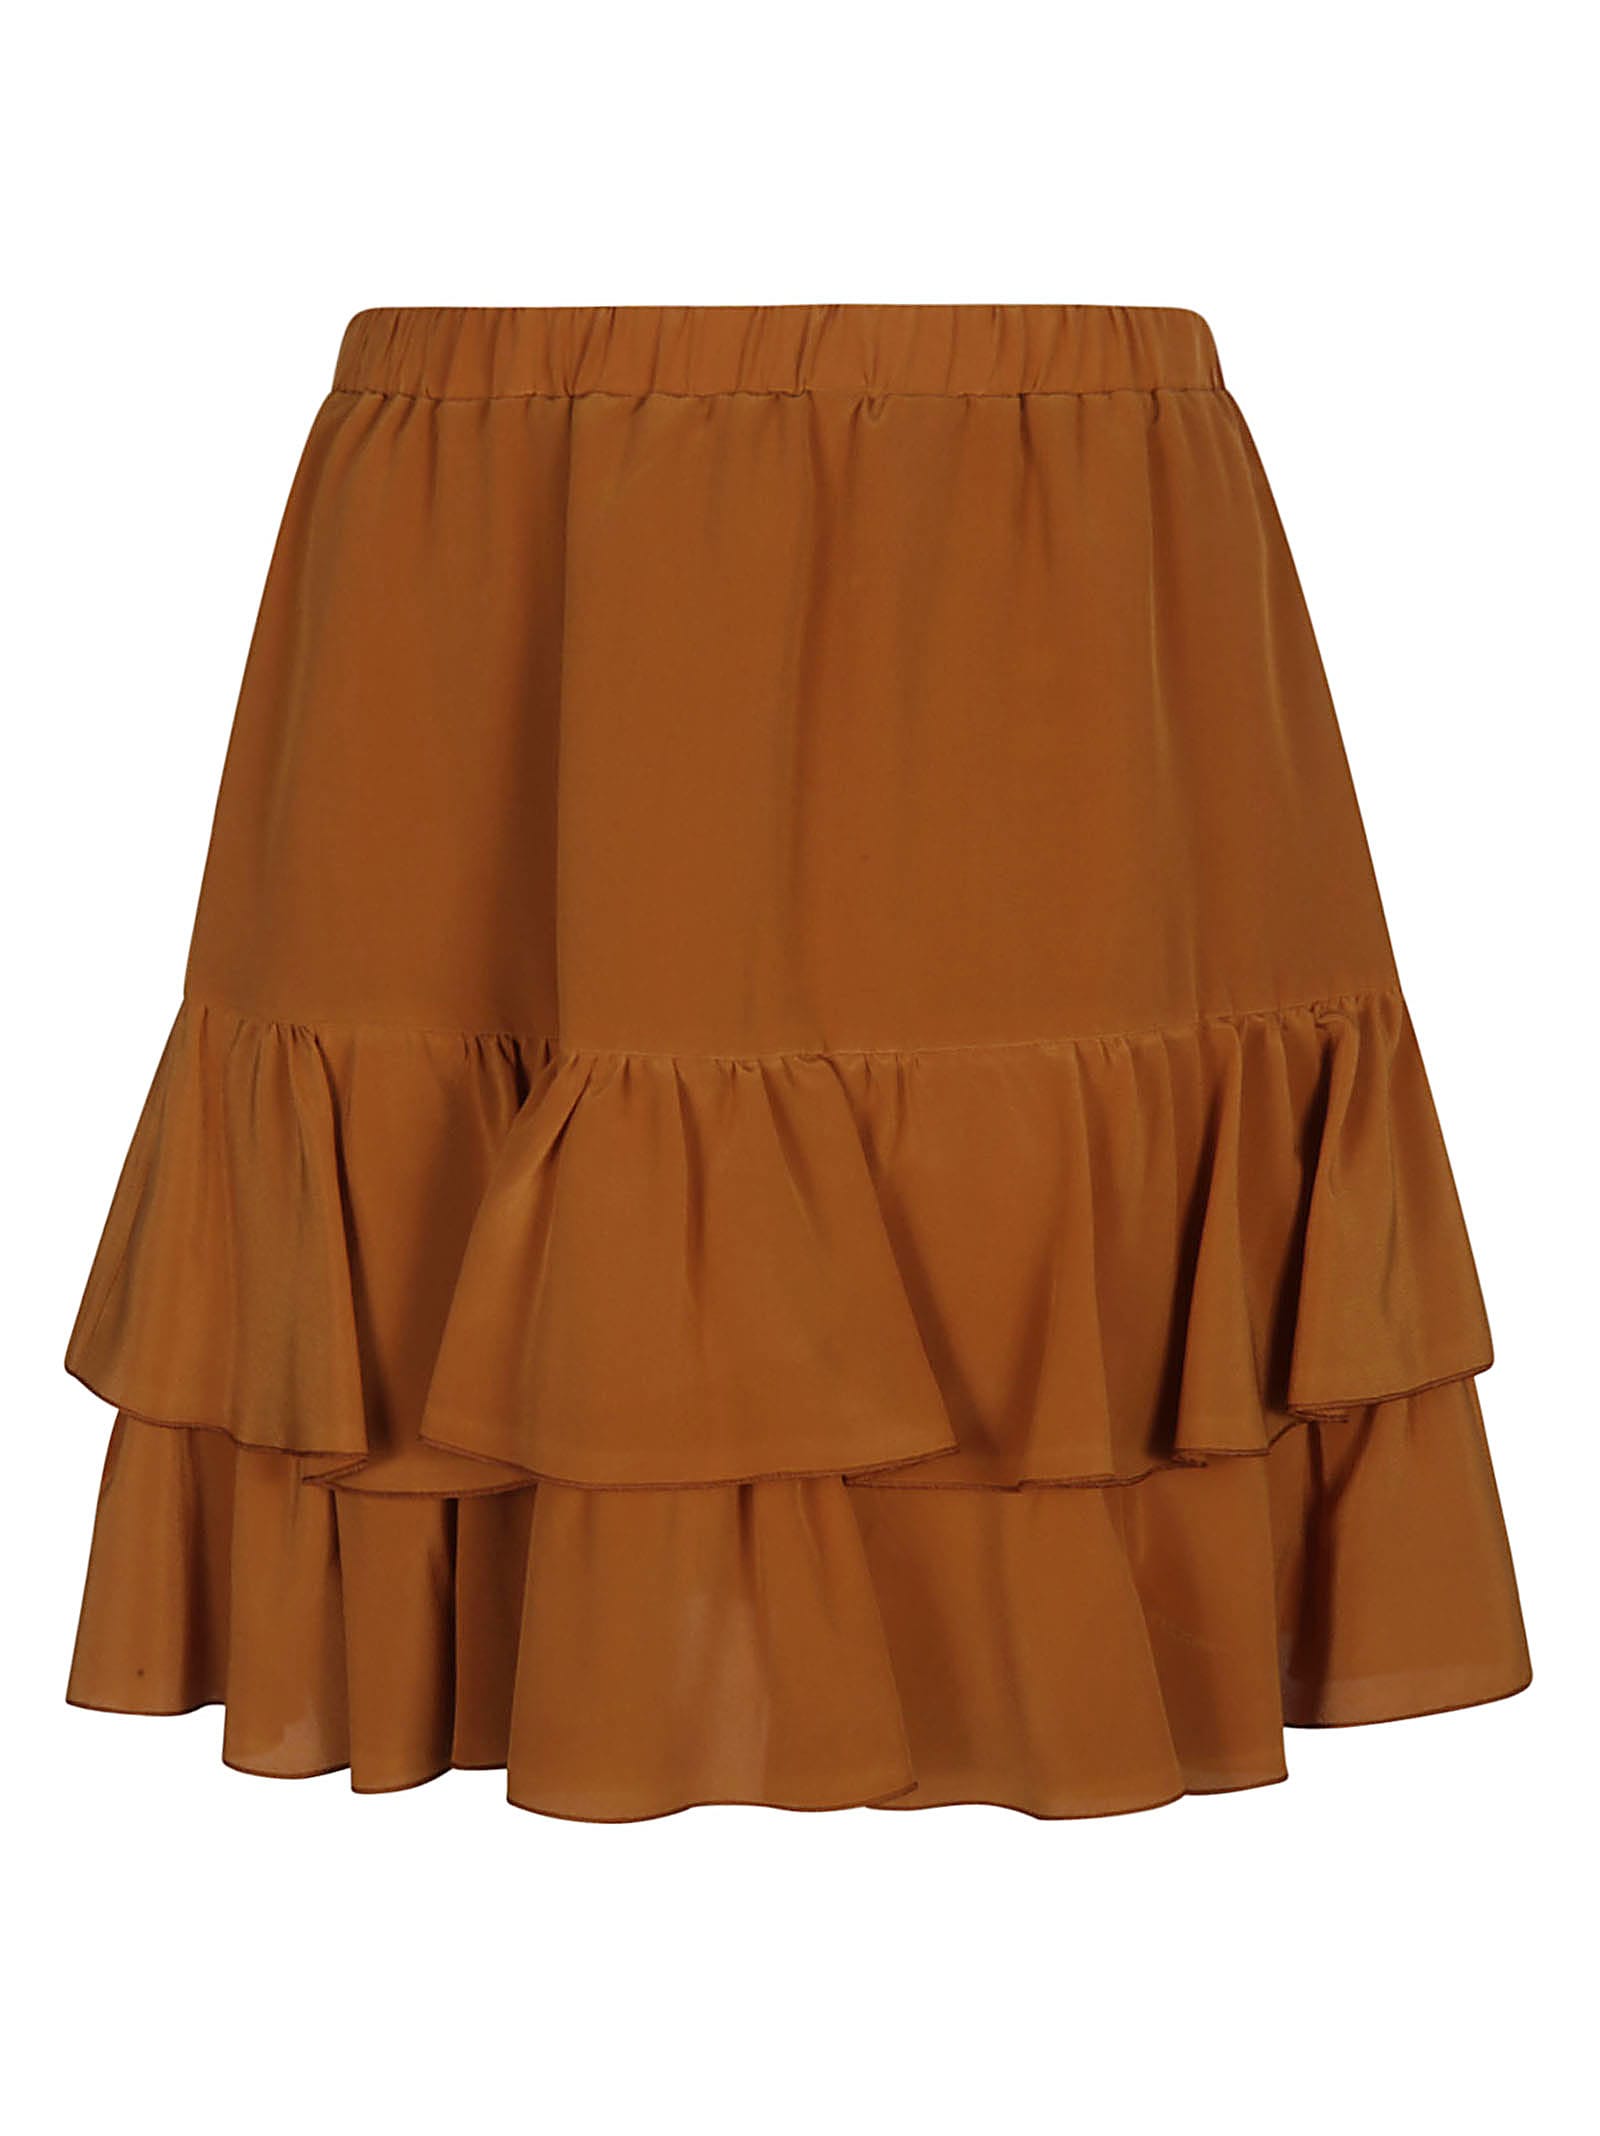 Federica Tosi Ruffled Skirt